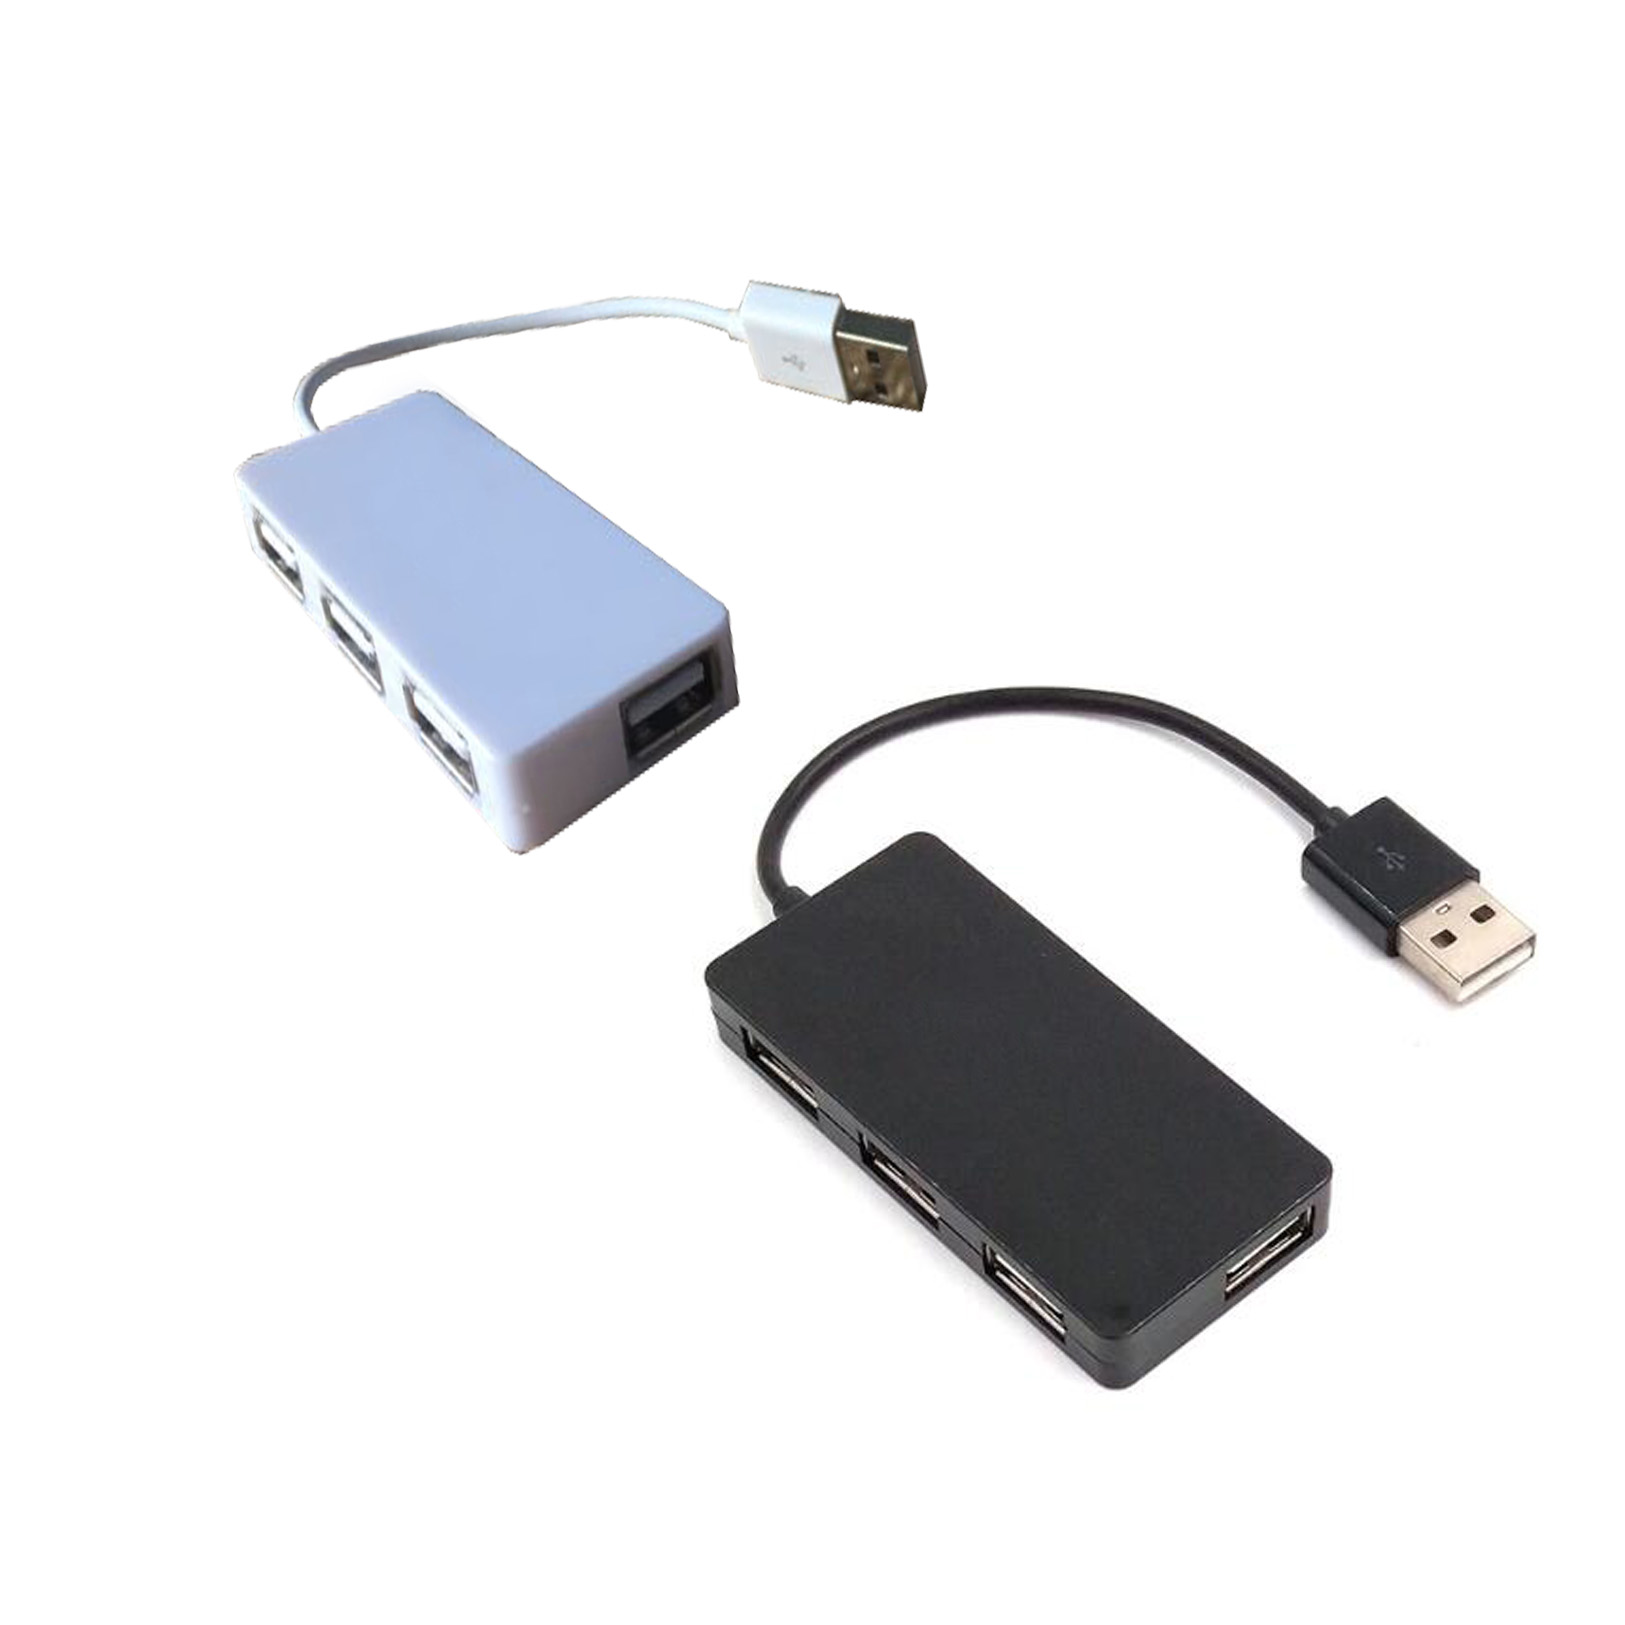 GL-AAA1553 USB hub 2.0 interface with 4 ports